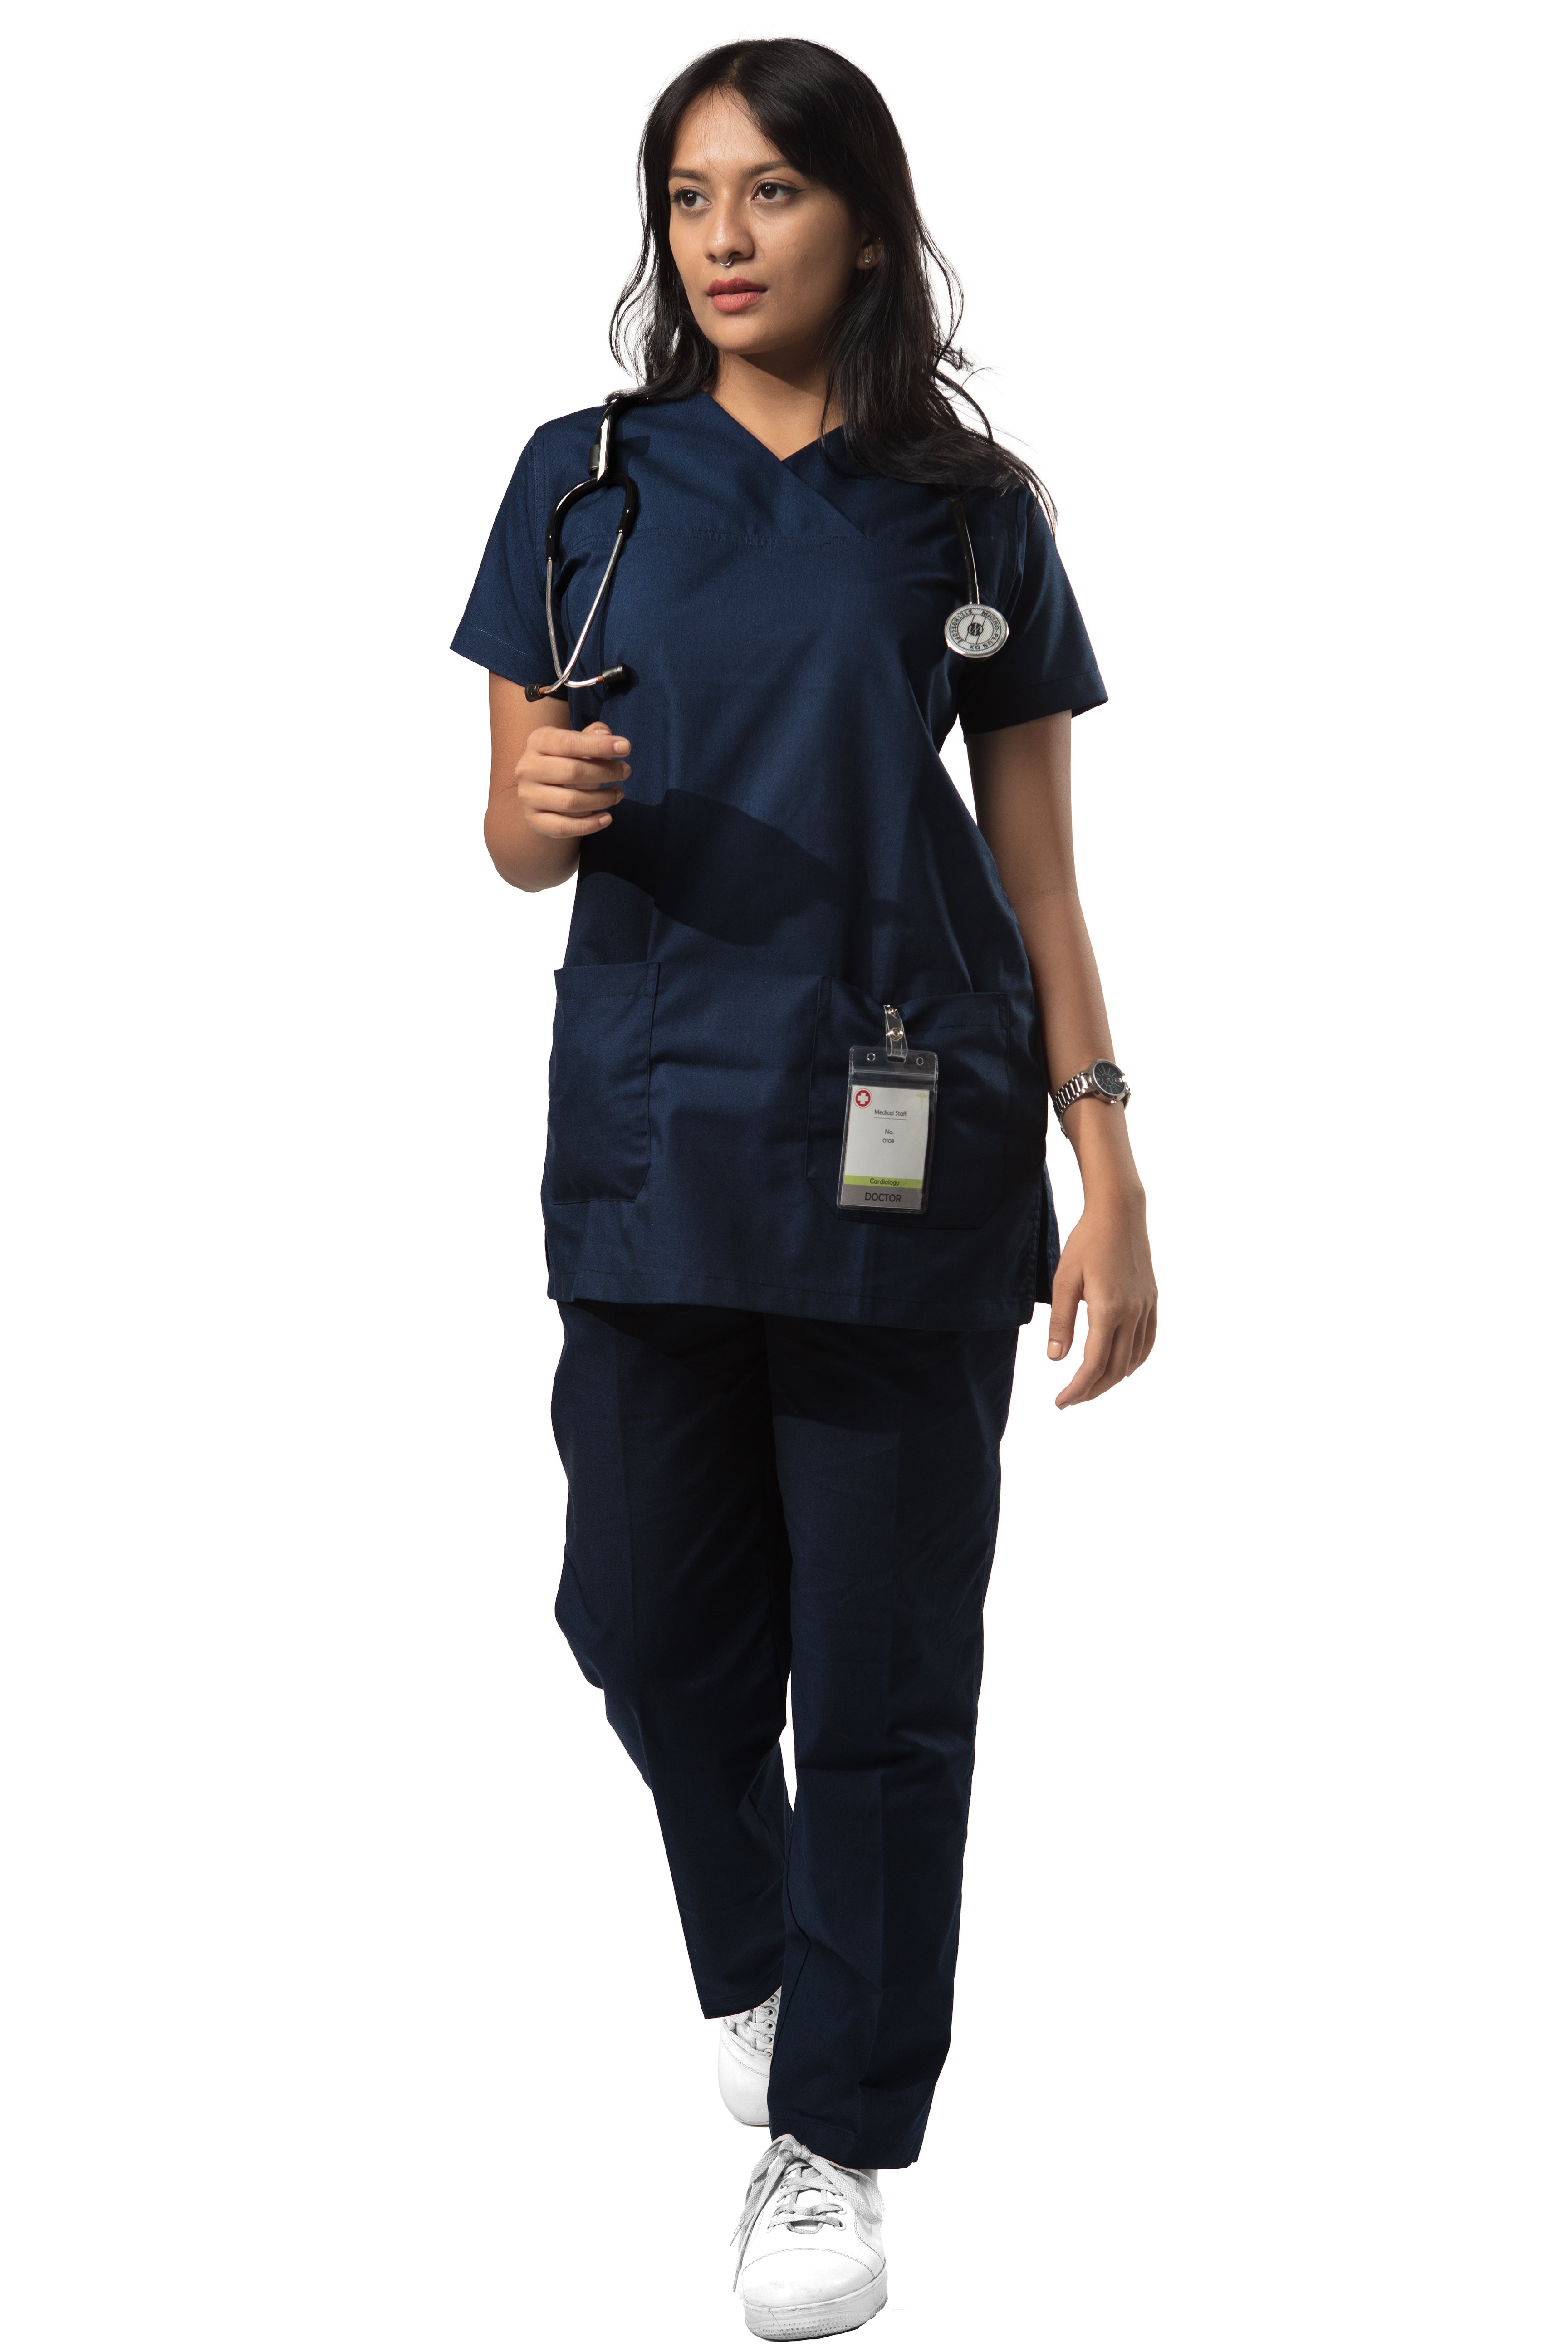 Generic Nursing Scrubs For Women Set Nurses Uniform Dark Blue